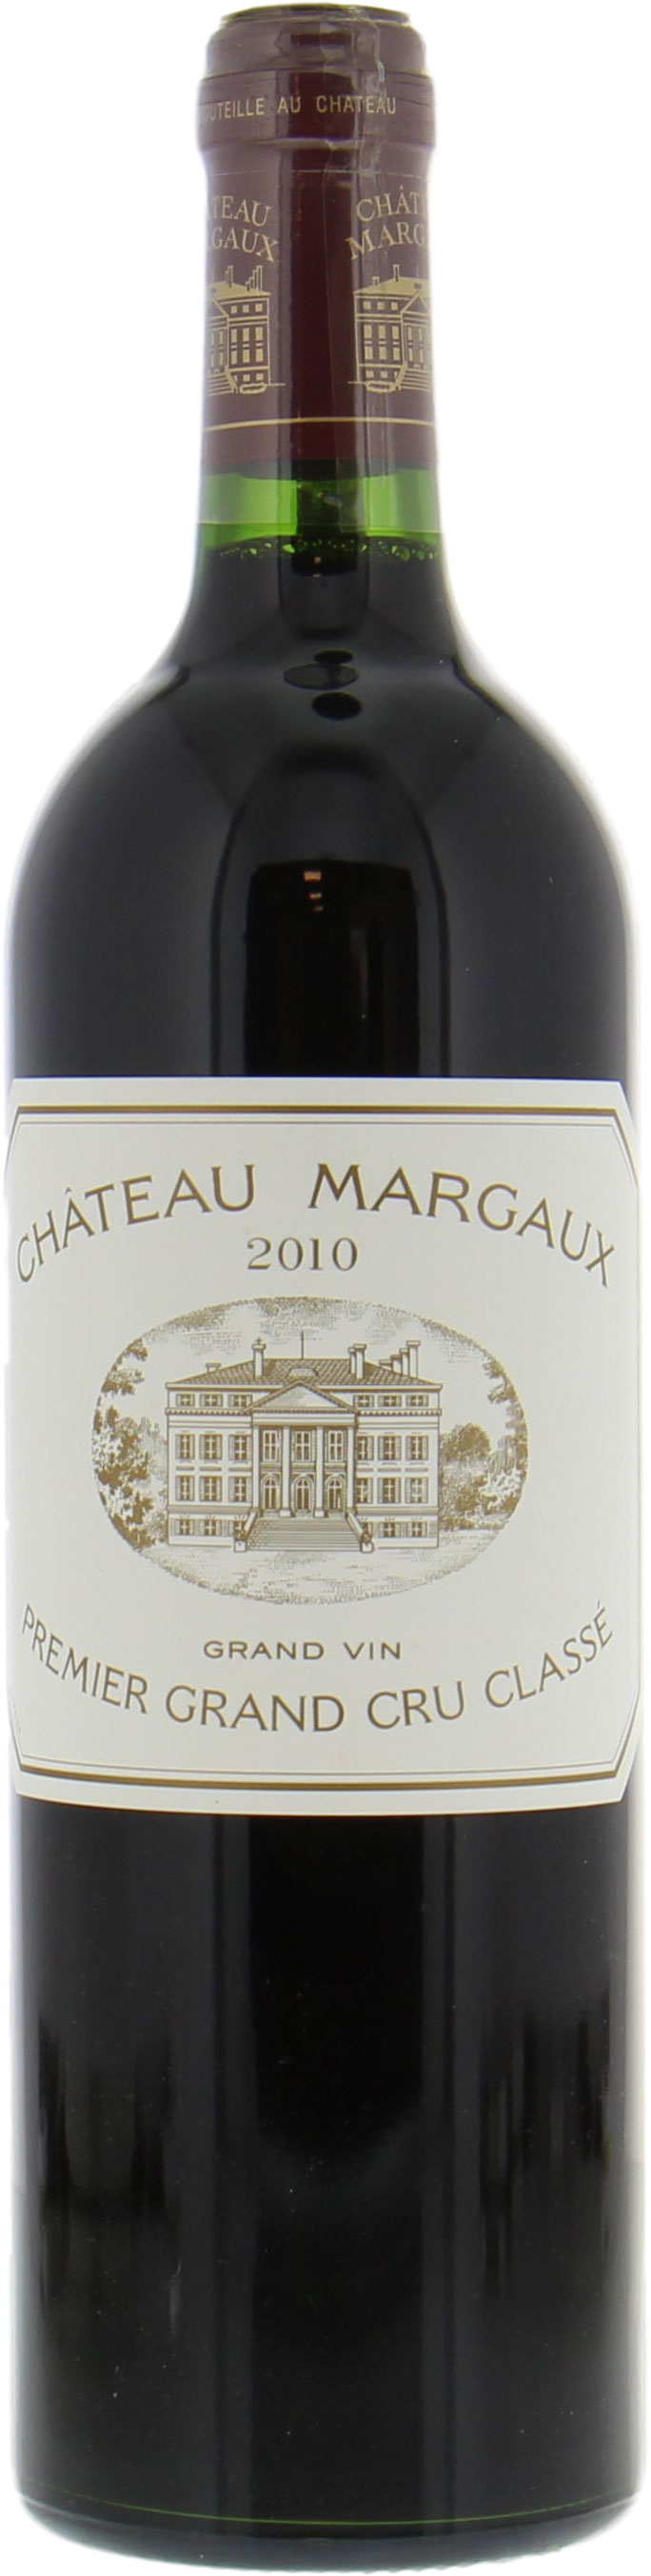 Chateau Margaux - Chateau Margaux 2010 Perfect